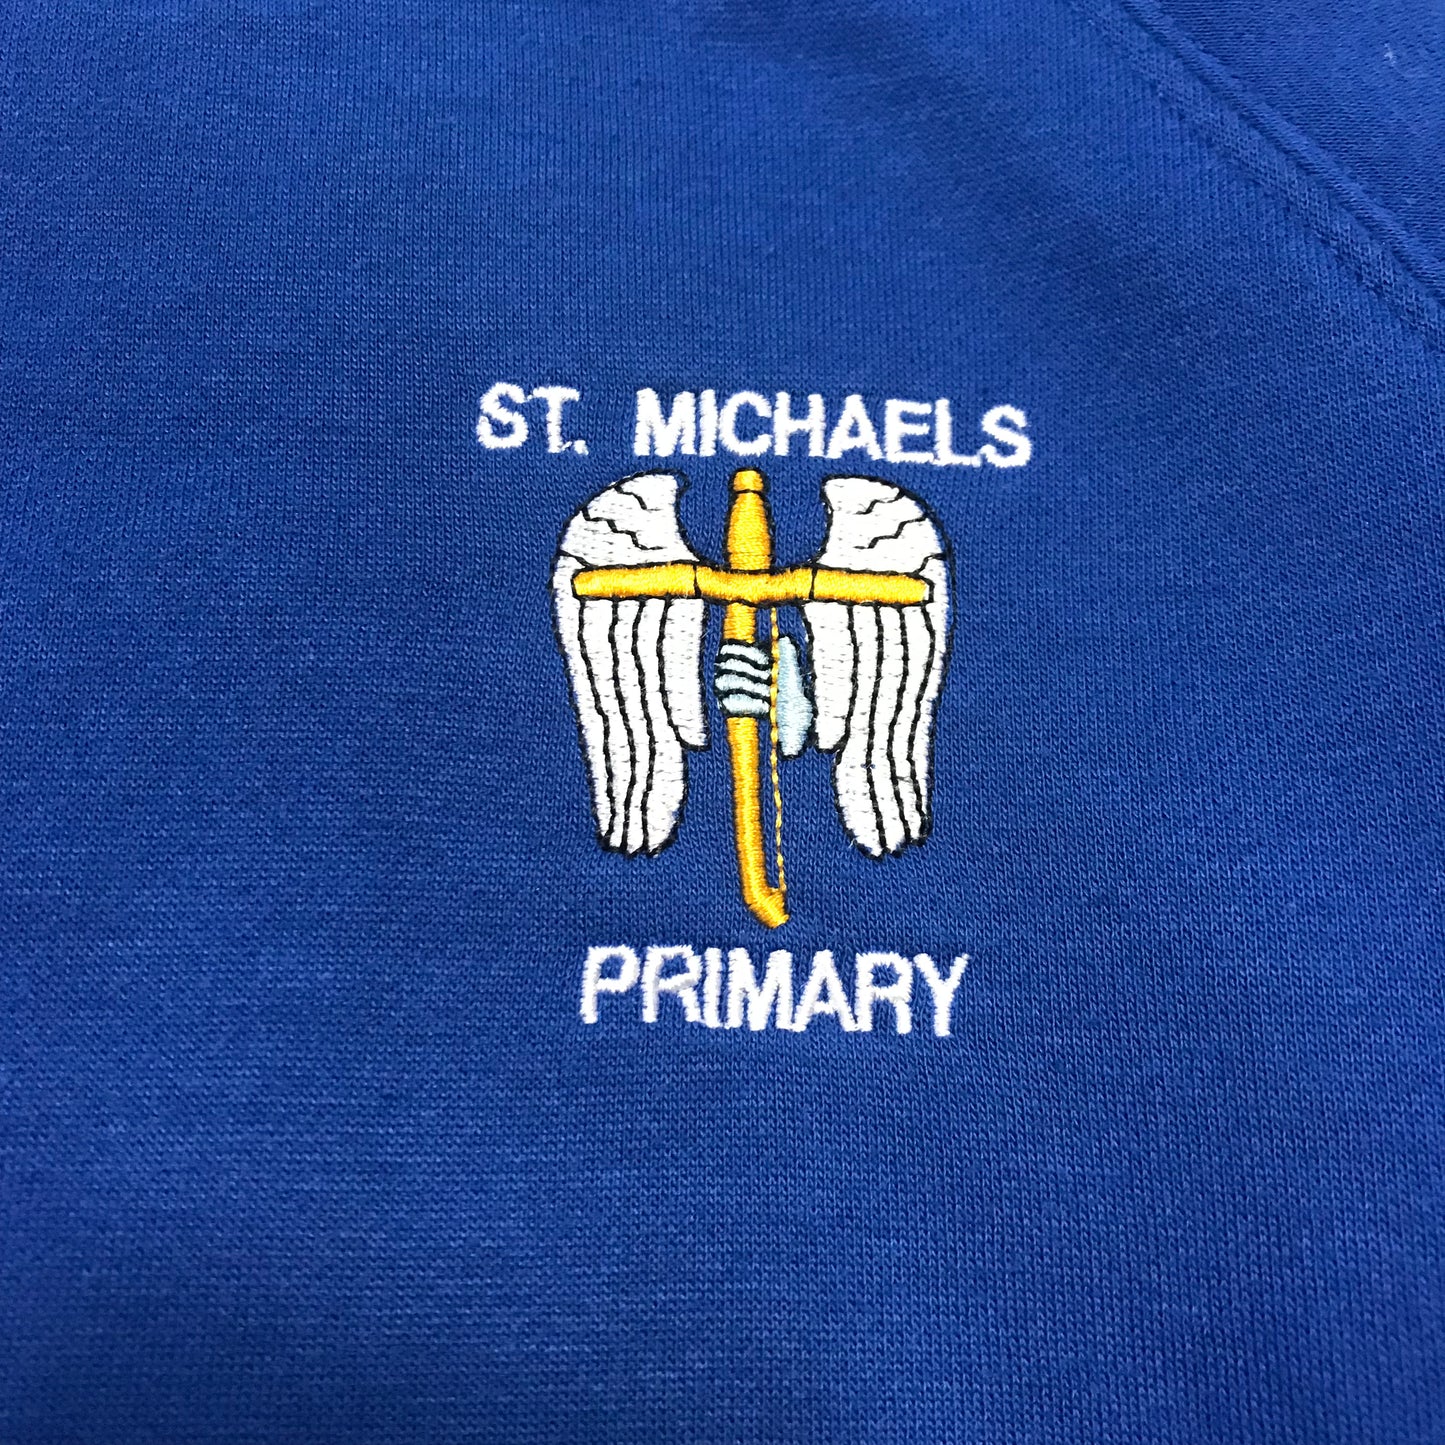 St. Michaels Primary Royal Blue Crewneck Jersey